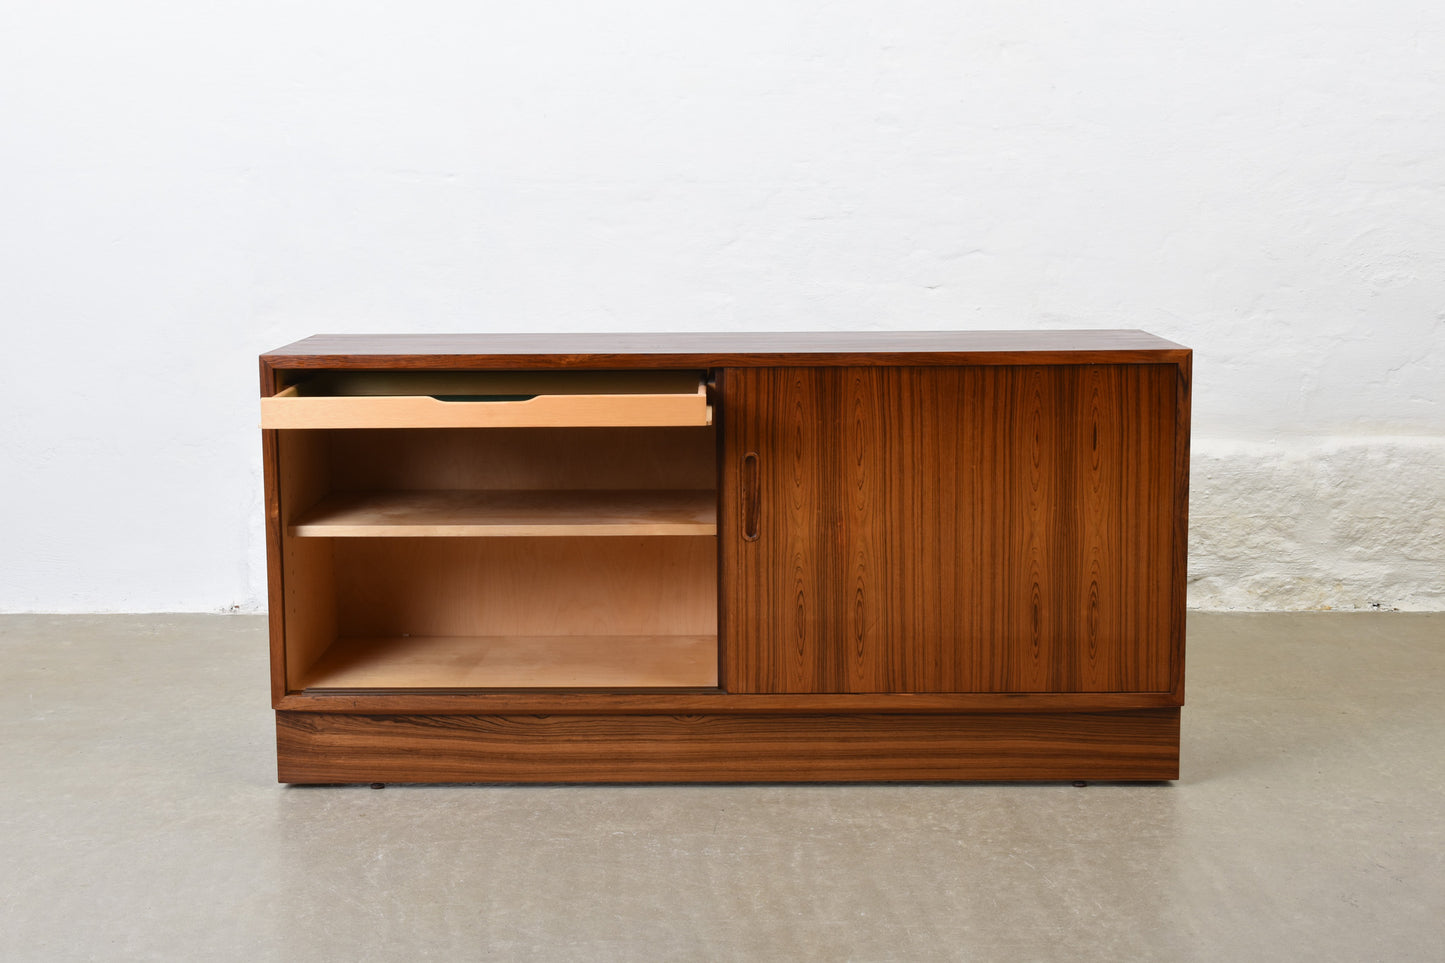 1960s rosewood sideboard by Carlo Jensen - 138L cm